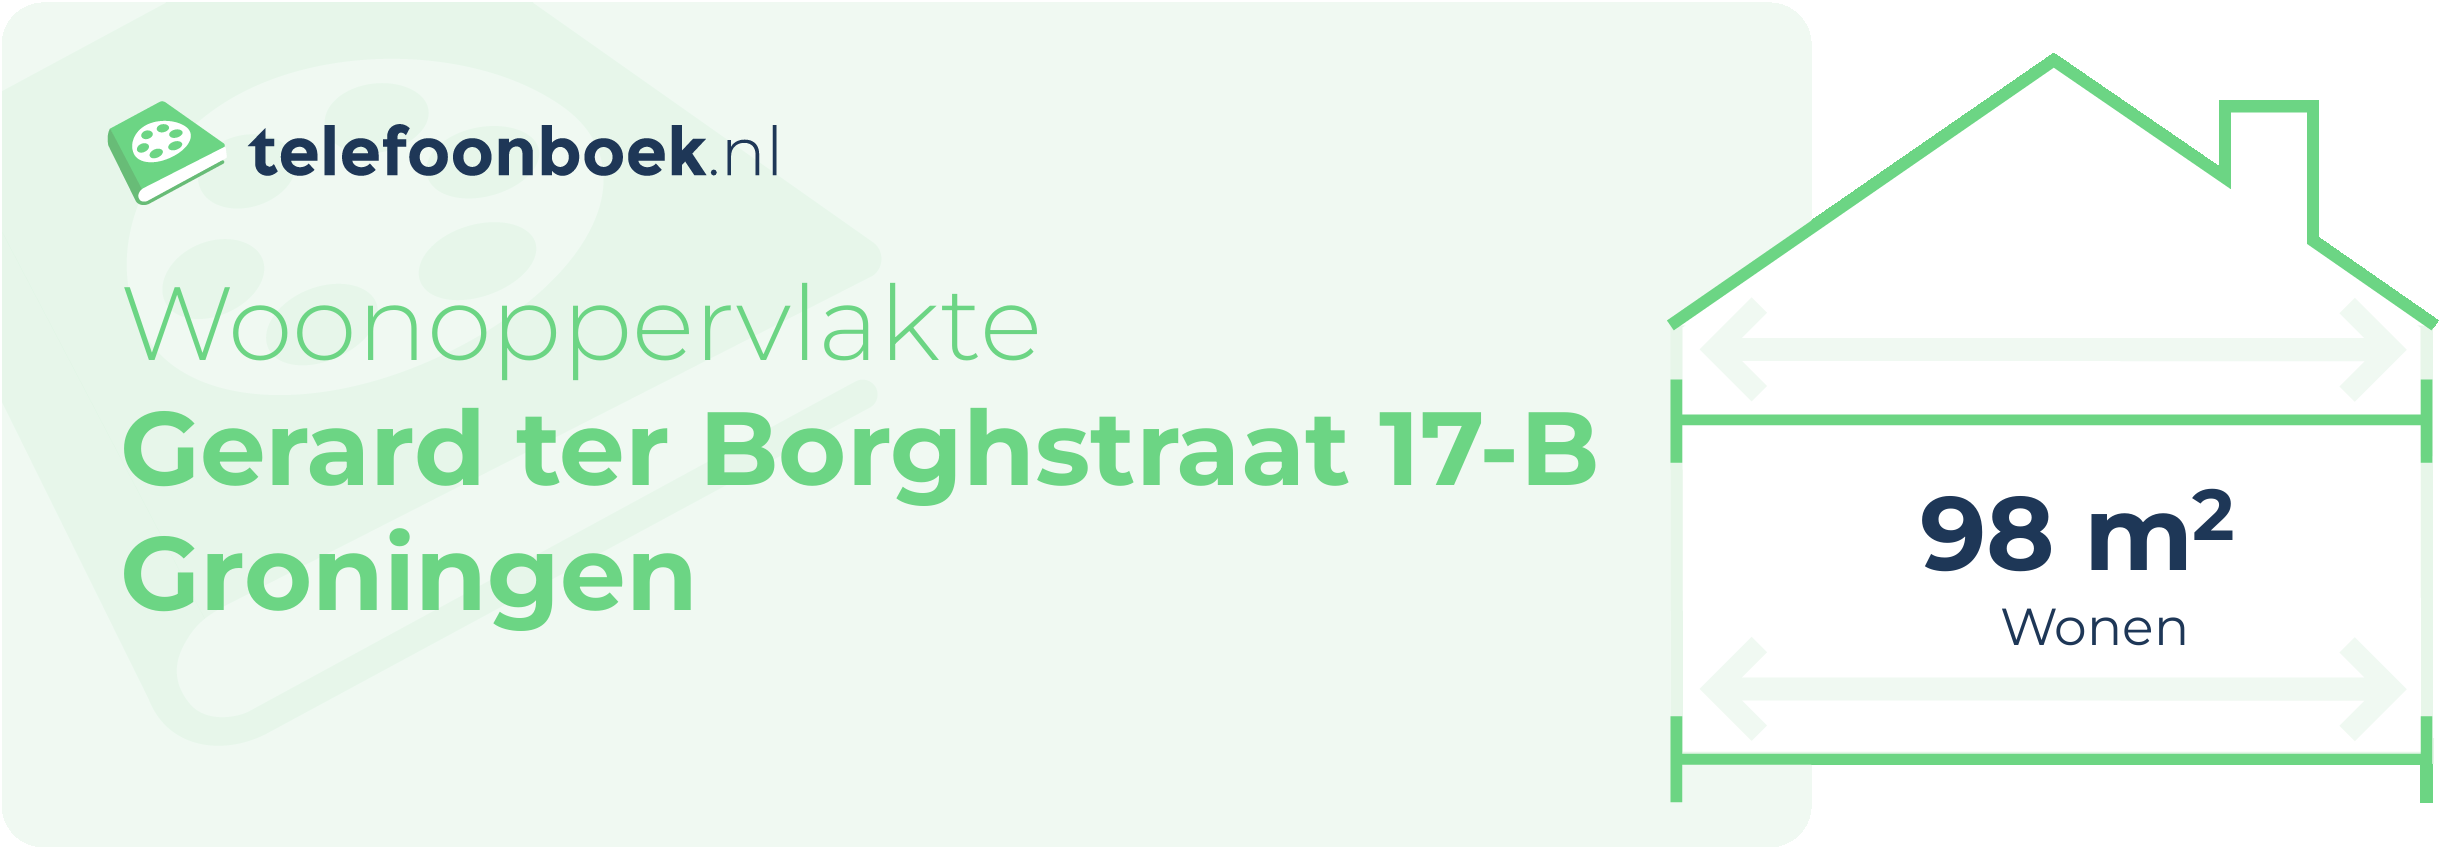 Woonoppervlakte Gerard Ter Borghstraat 17-B Groningen